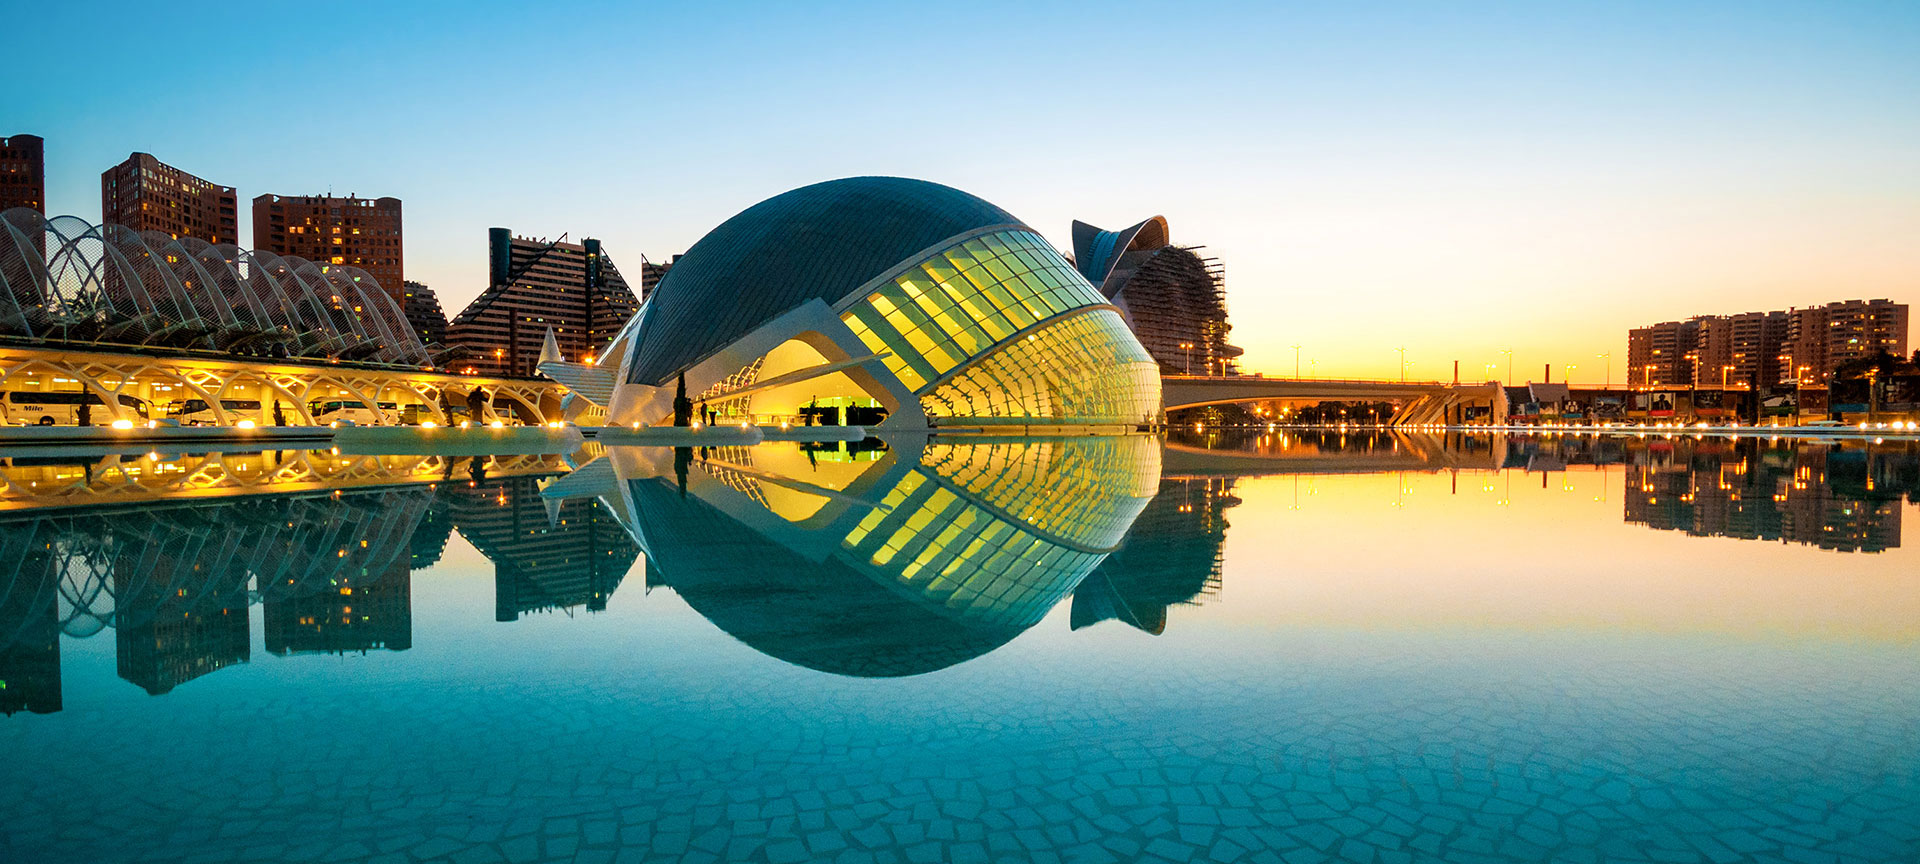 City of Arts and Sciences, Valencia 